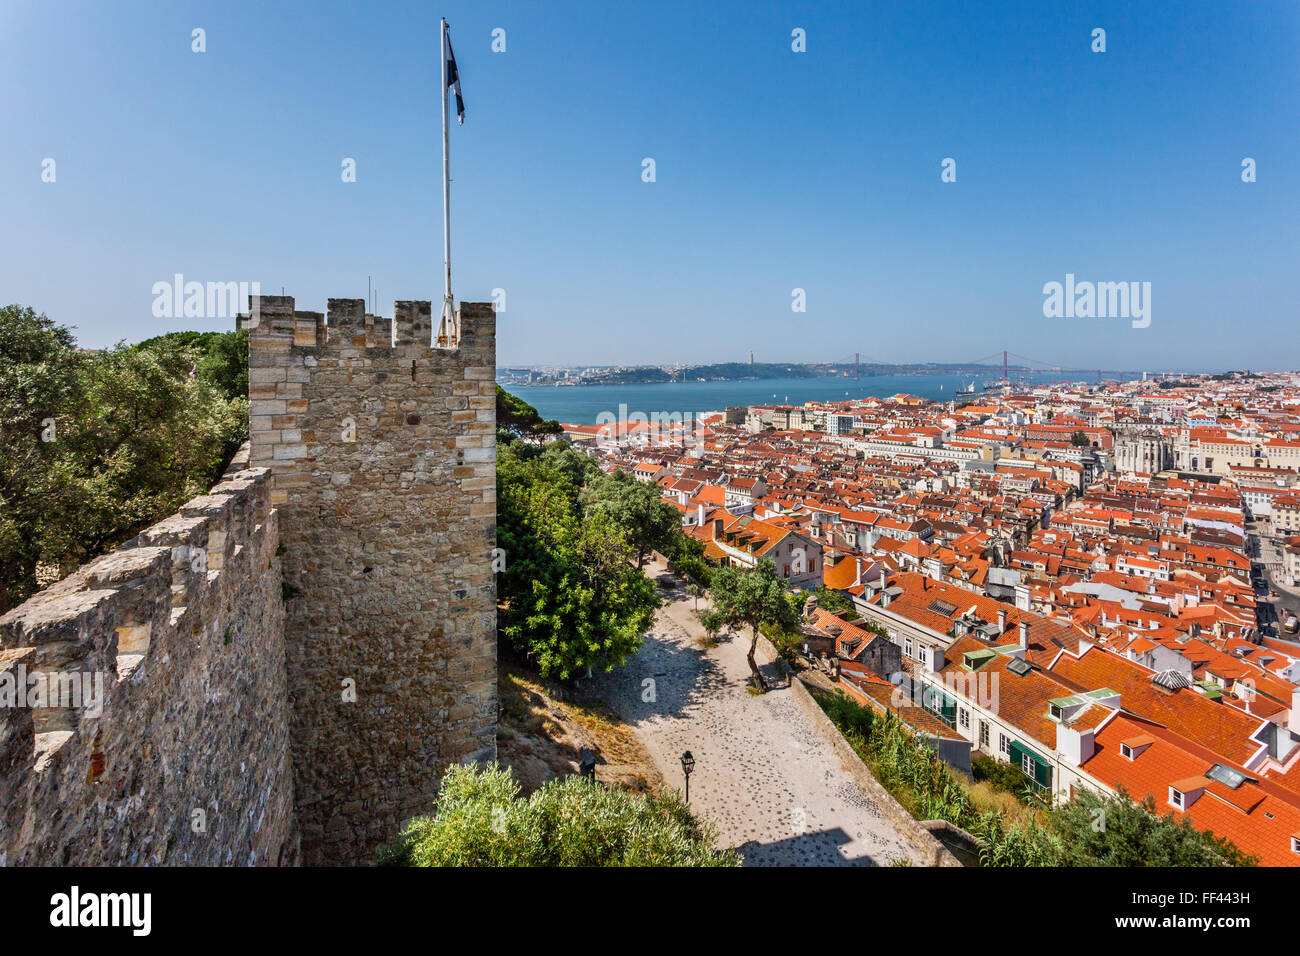 view from the battlements of Castelo de Sao Jorge, St. George's Castle, Lisbon, Portugal Stock Photo